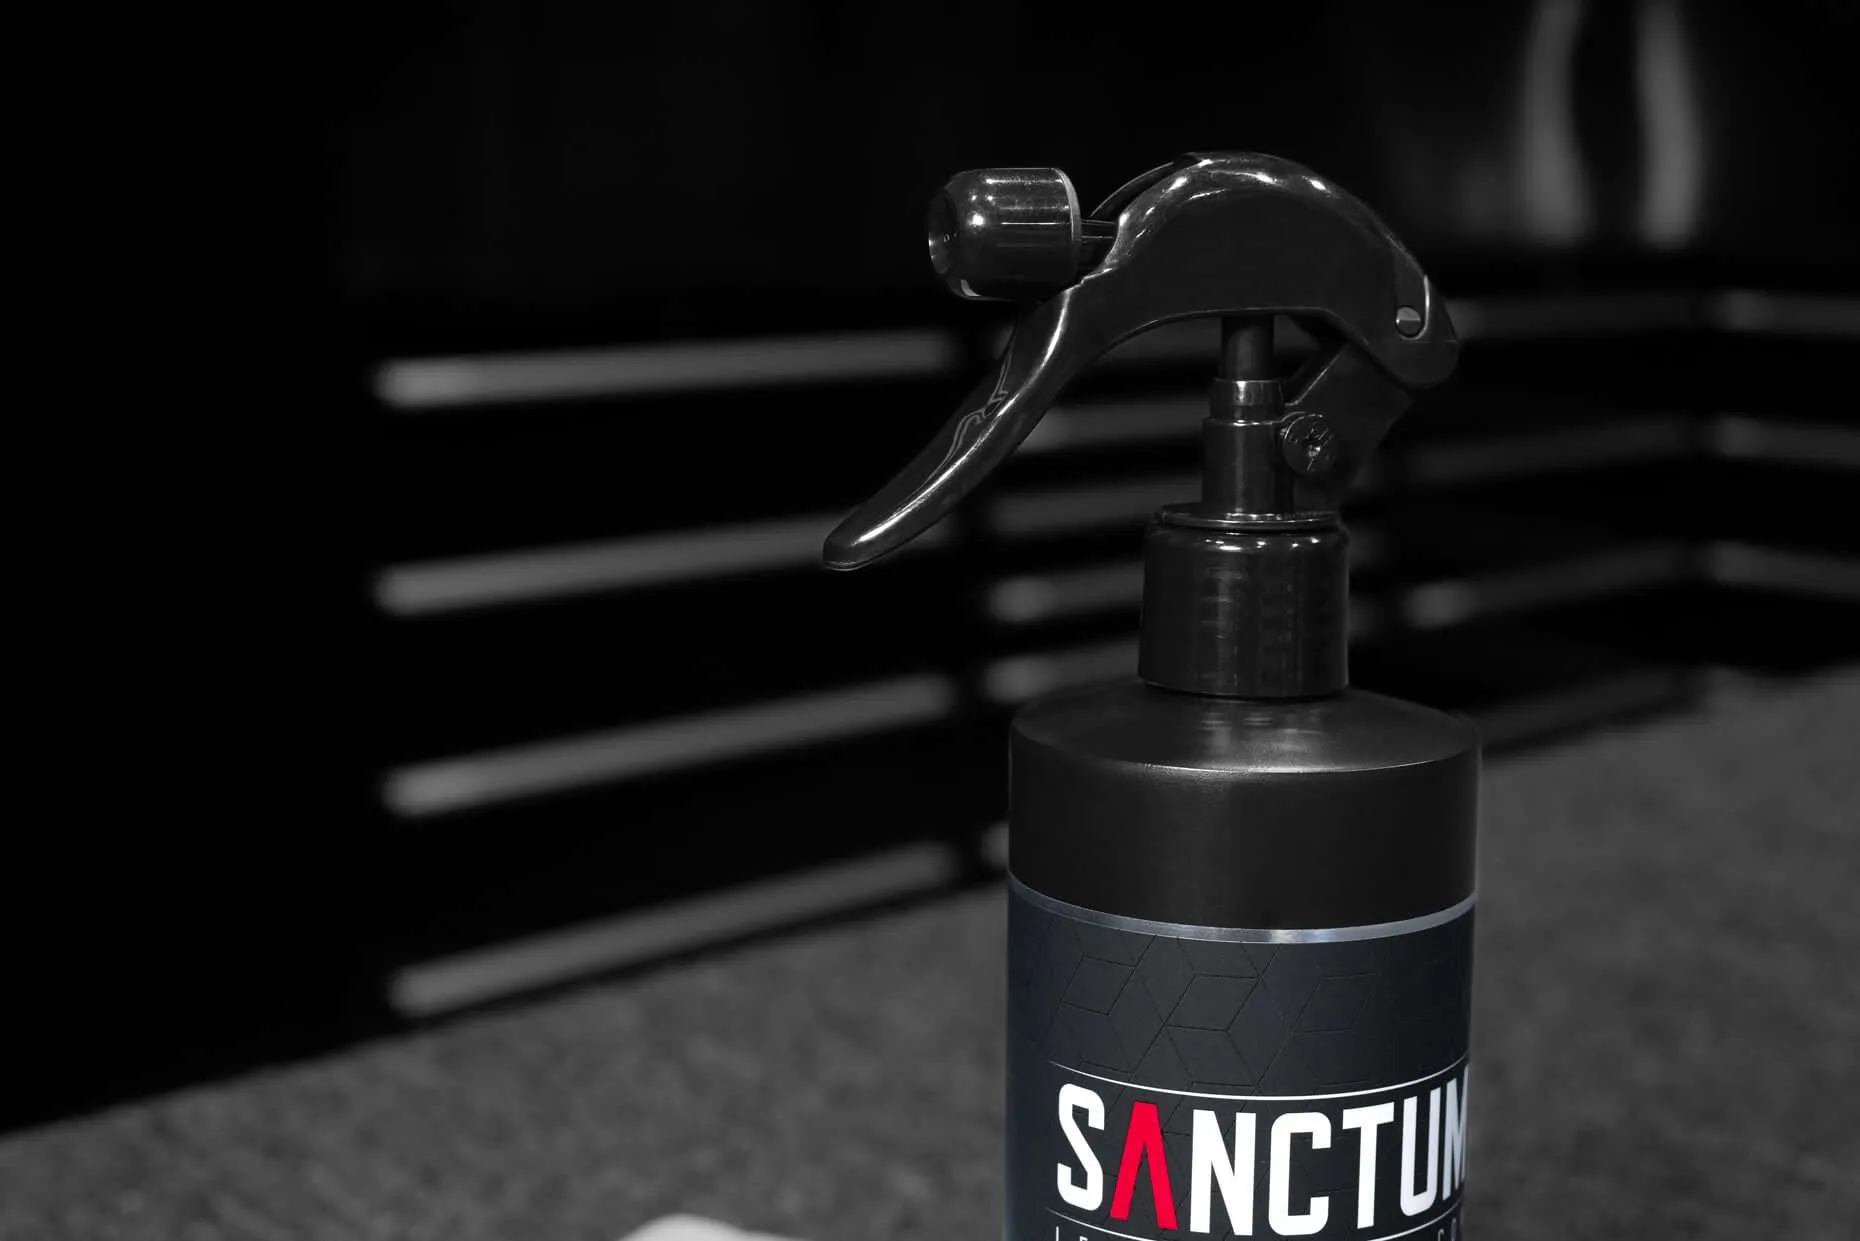 16oz bottle of Sanctum automotive leather cleaner with microfiber towel - close up of sprayer nozzle